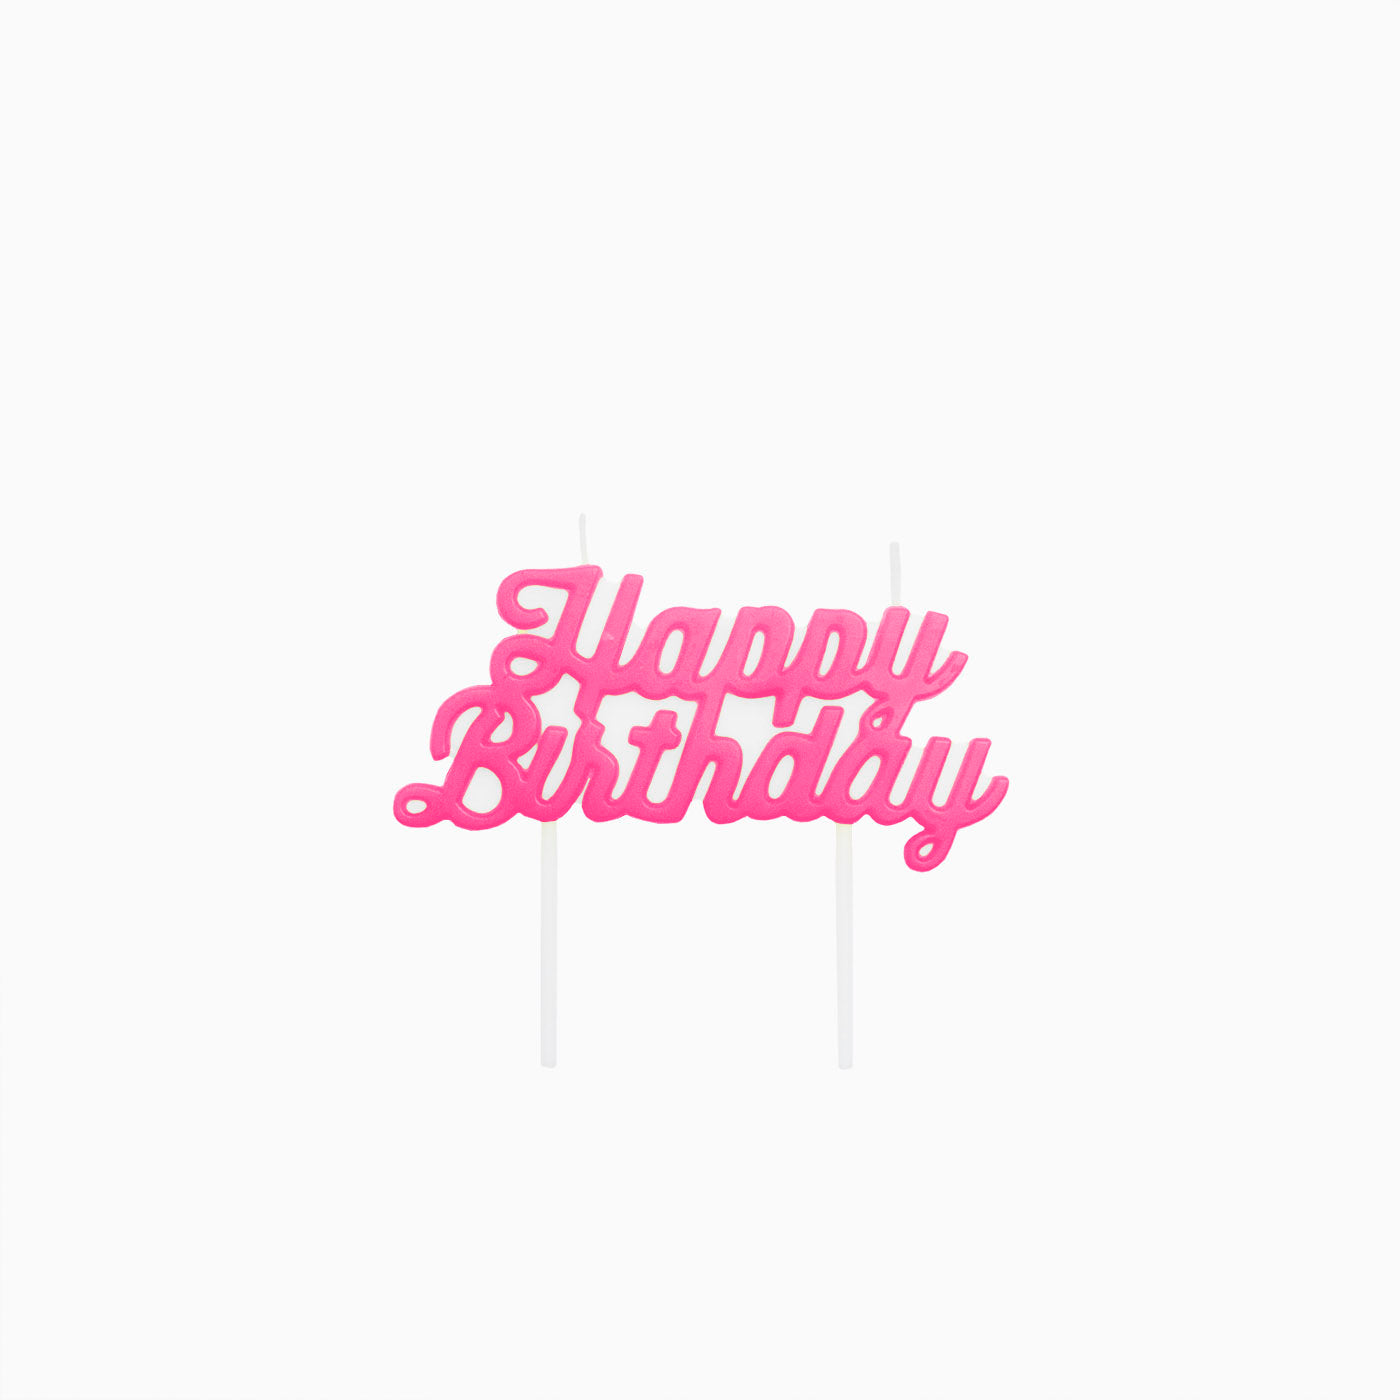 Sail "Happy Birthday" pink fluoride